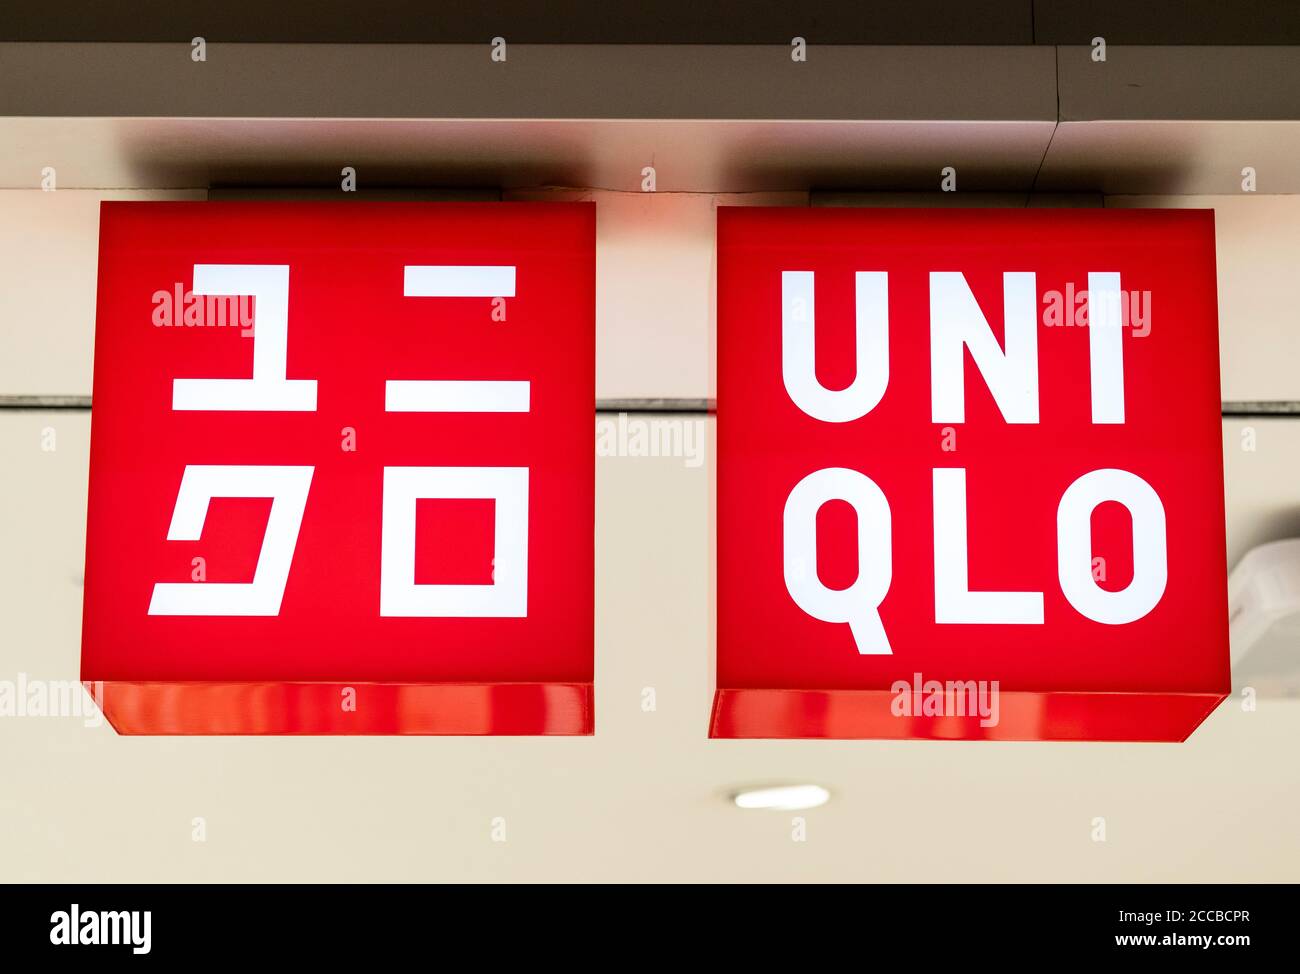 Japanese clothing brand Uniqlo logo in Hong Kong Stock Photo - Alamy